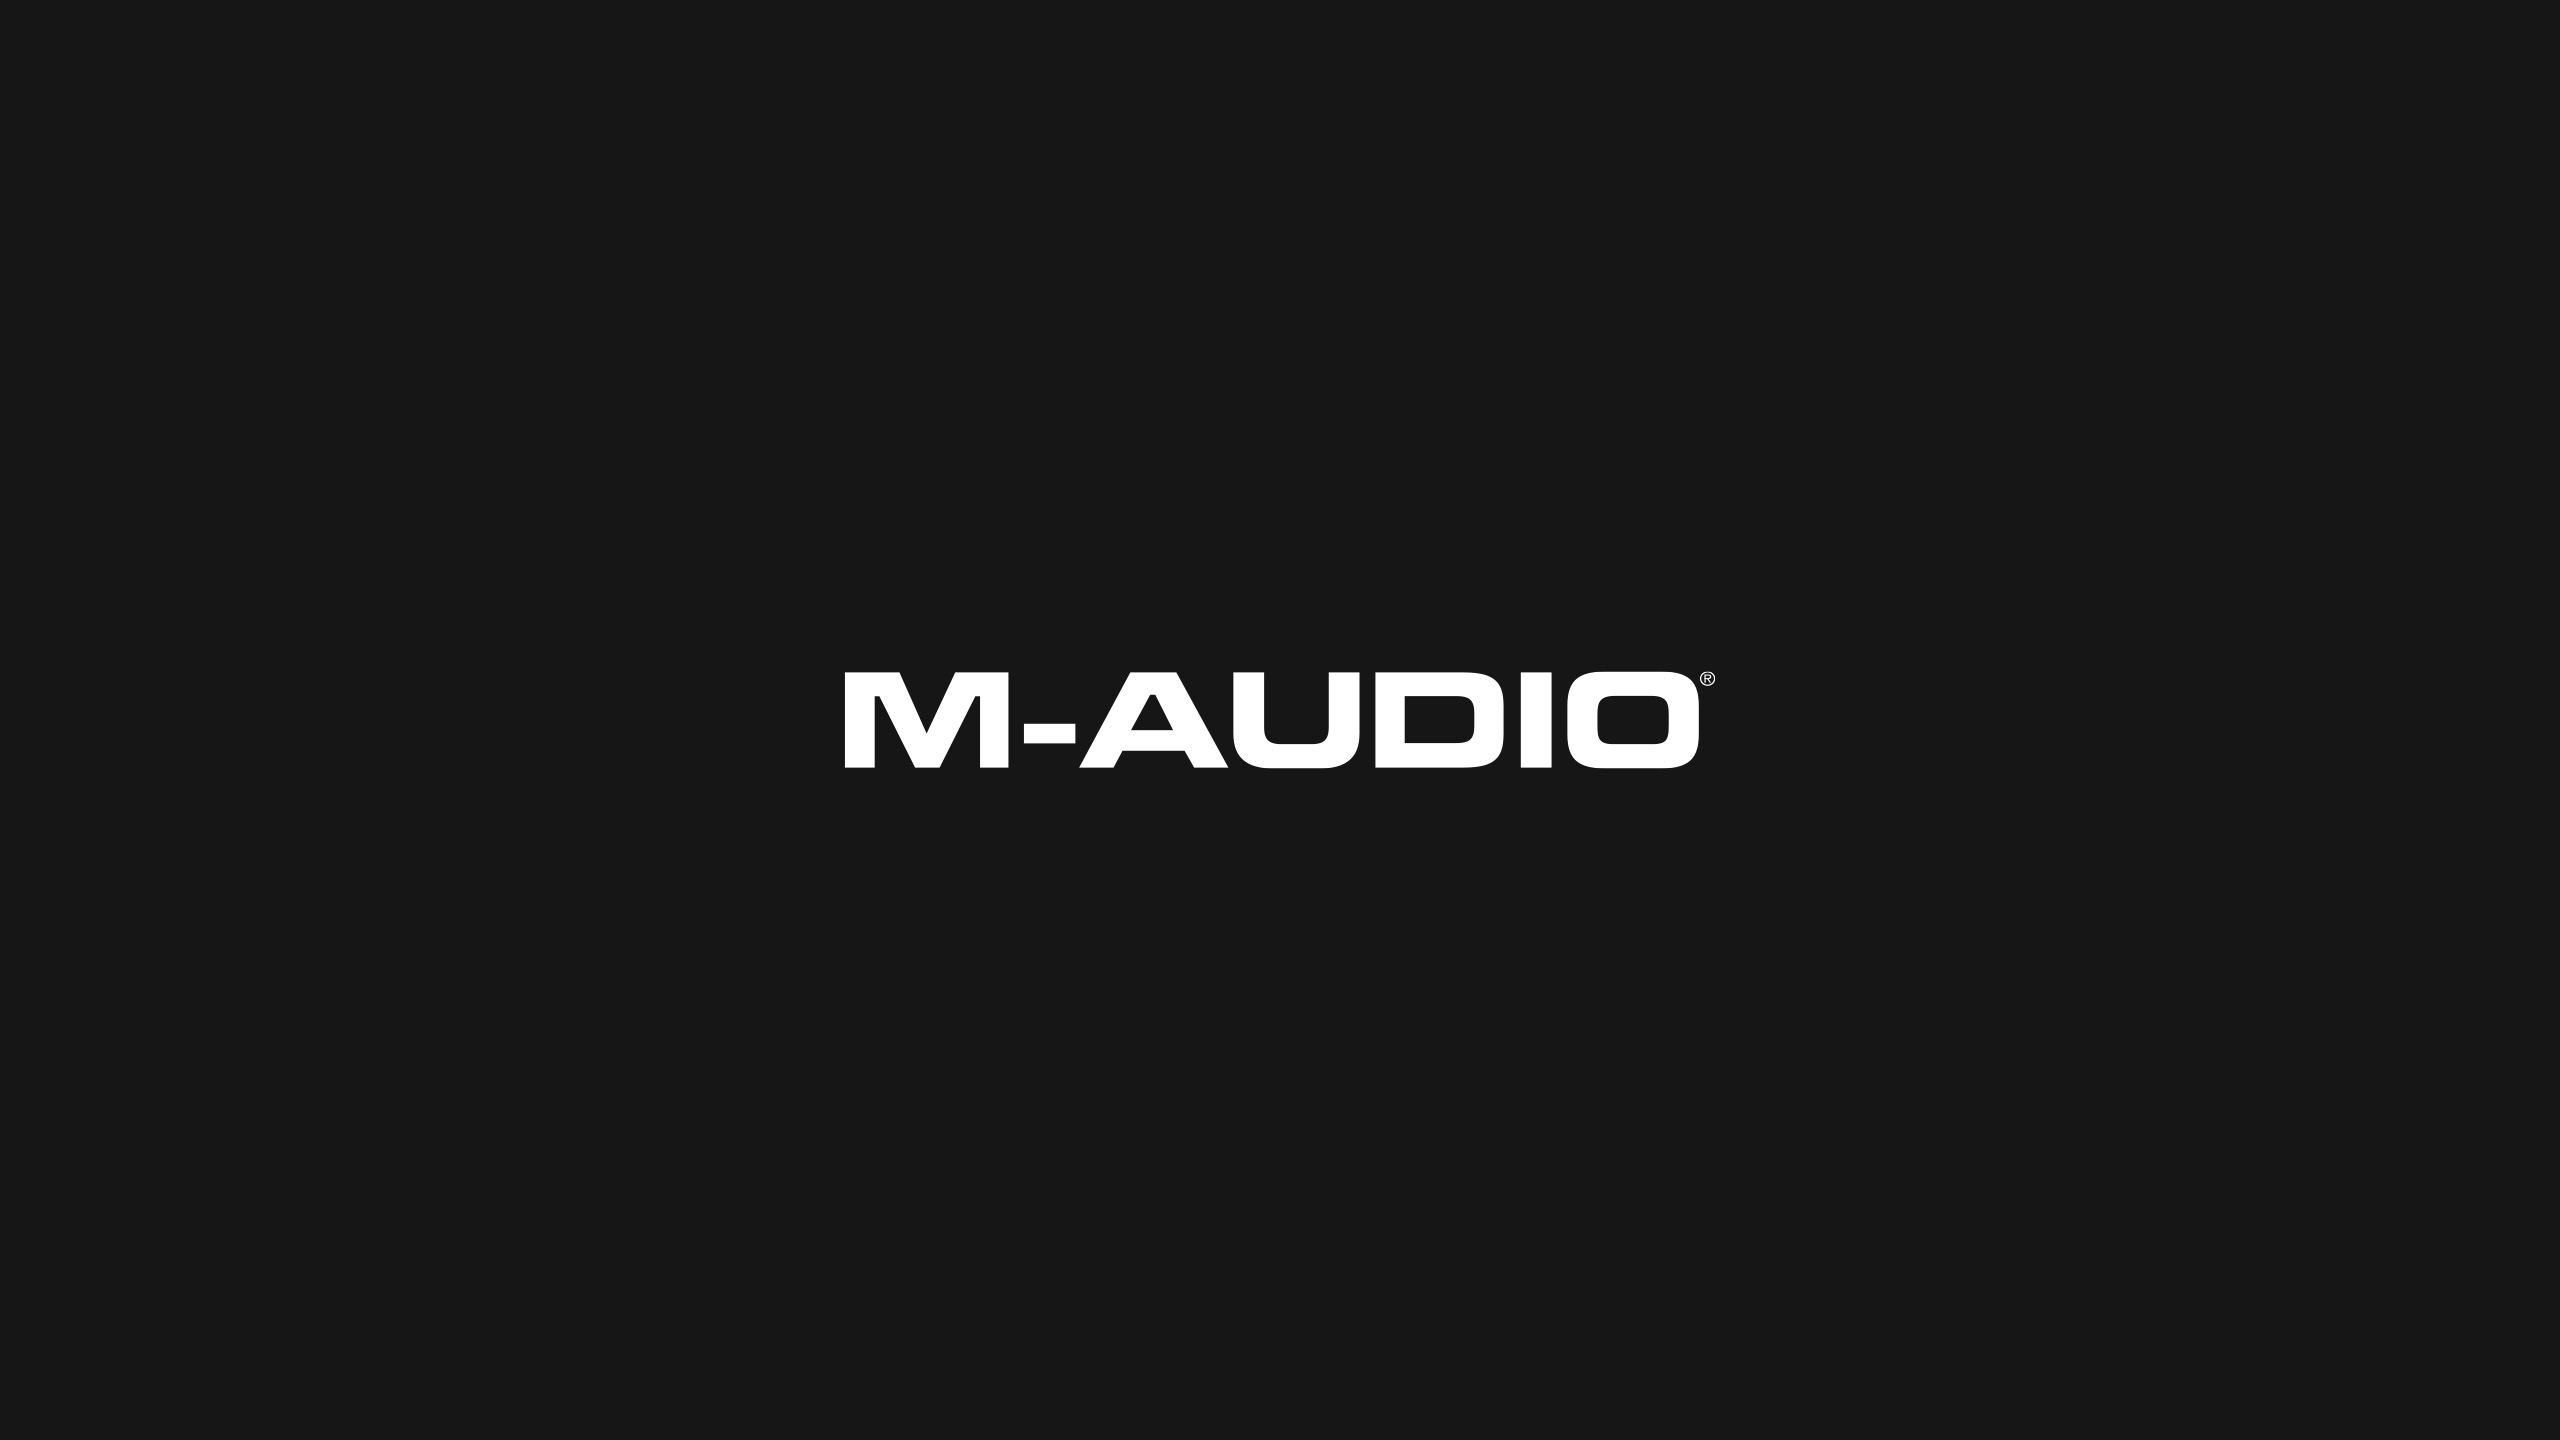 Audio Music Sound Speakers Headphones M Audio Black Background 2560x1440